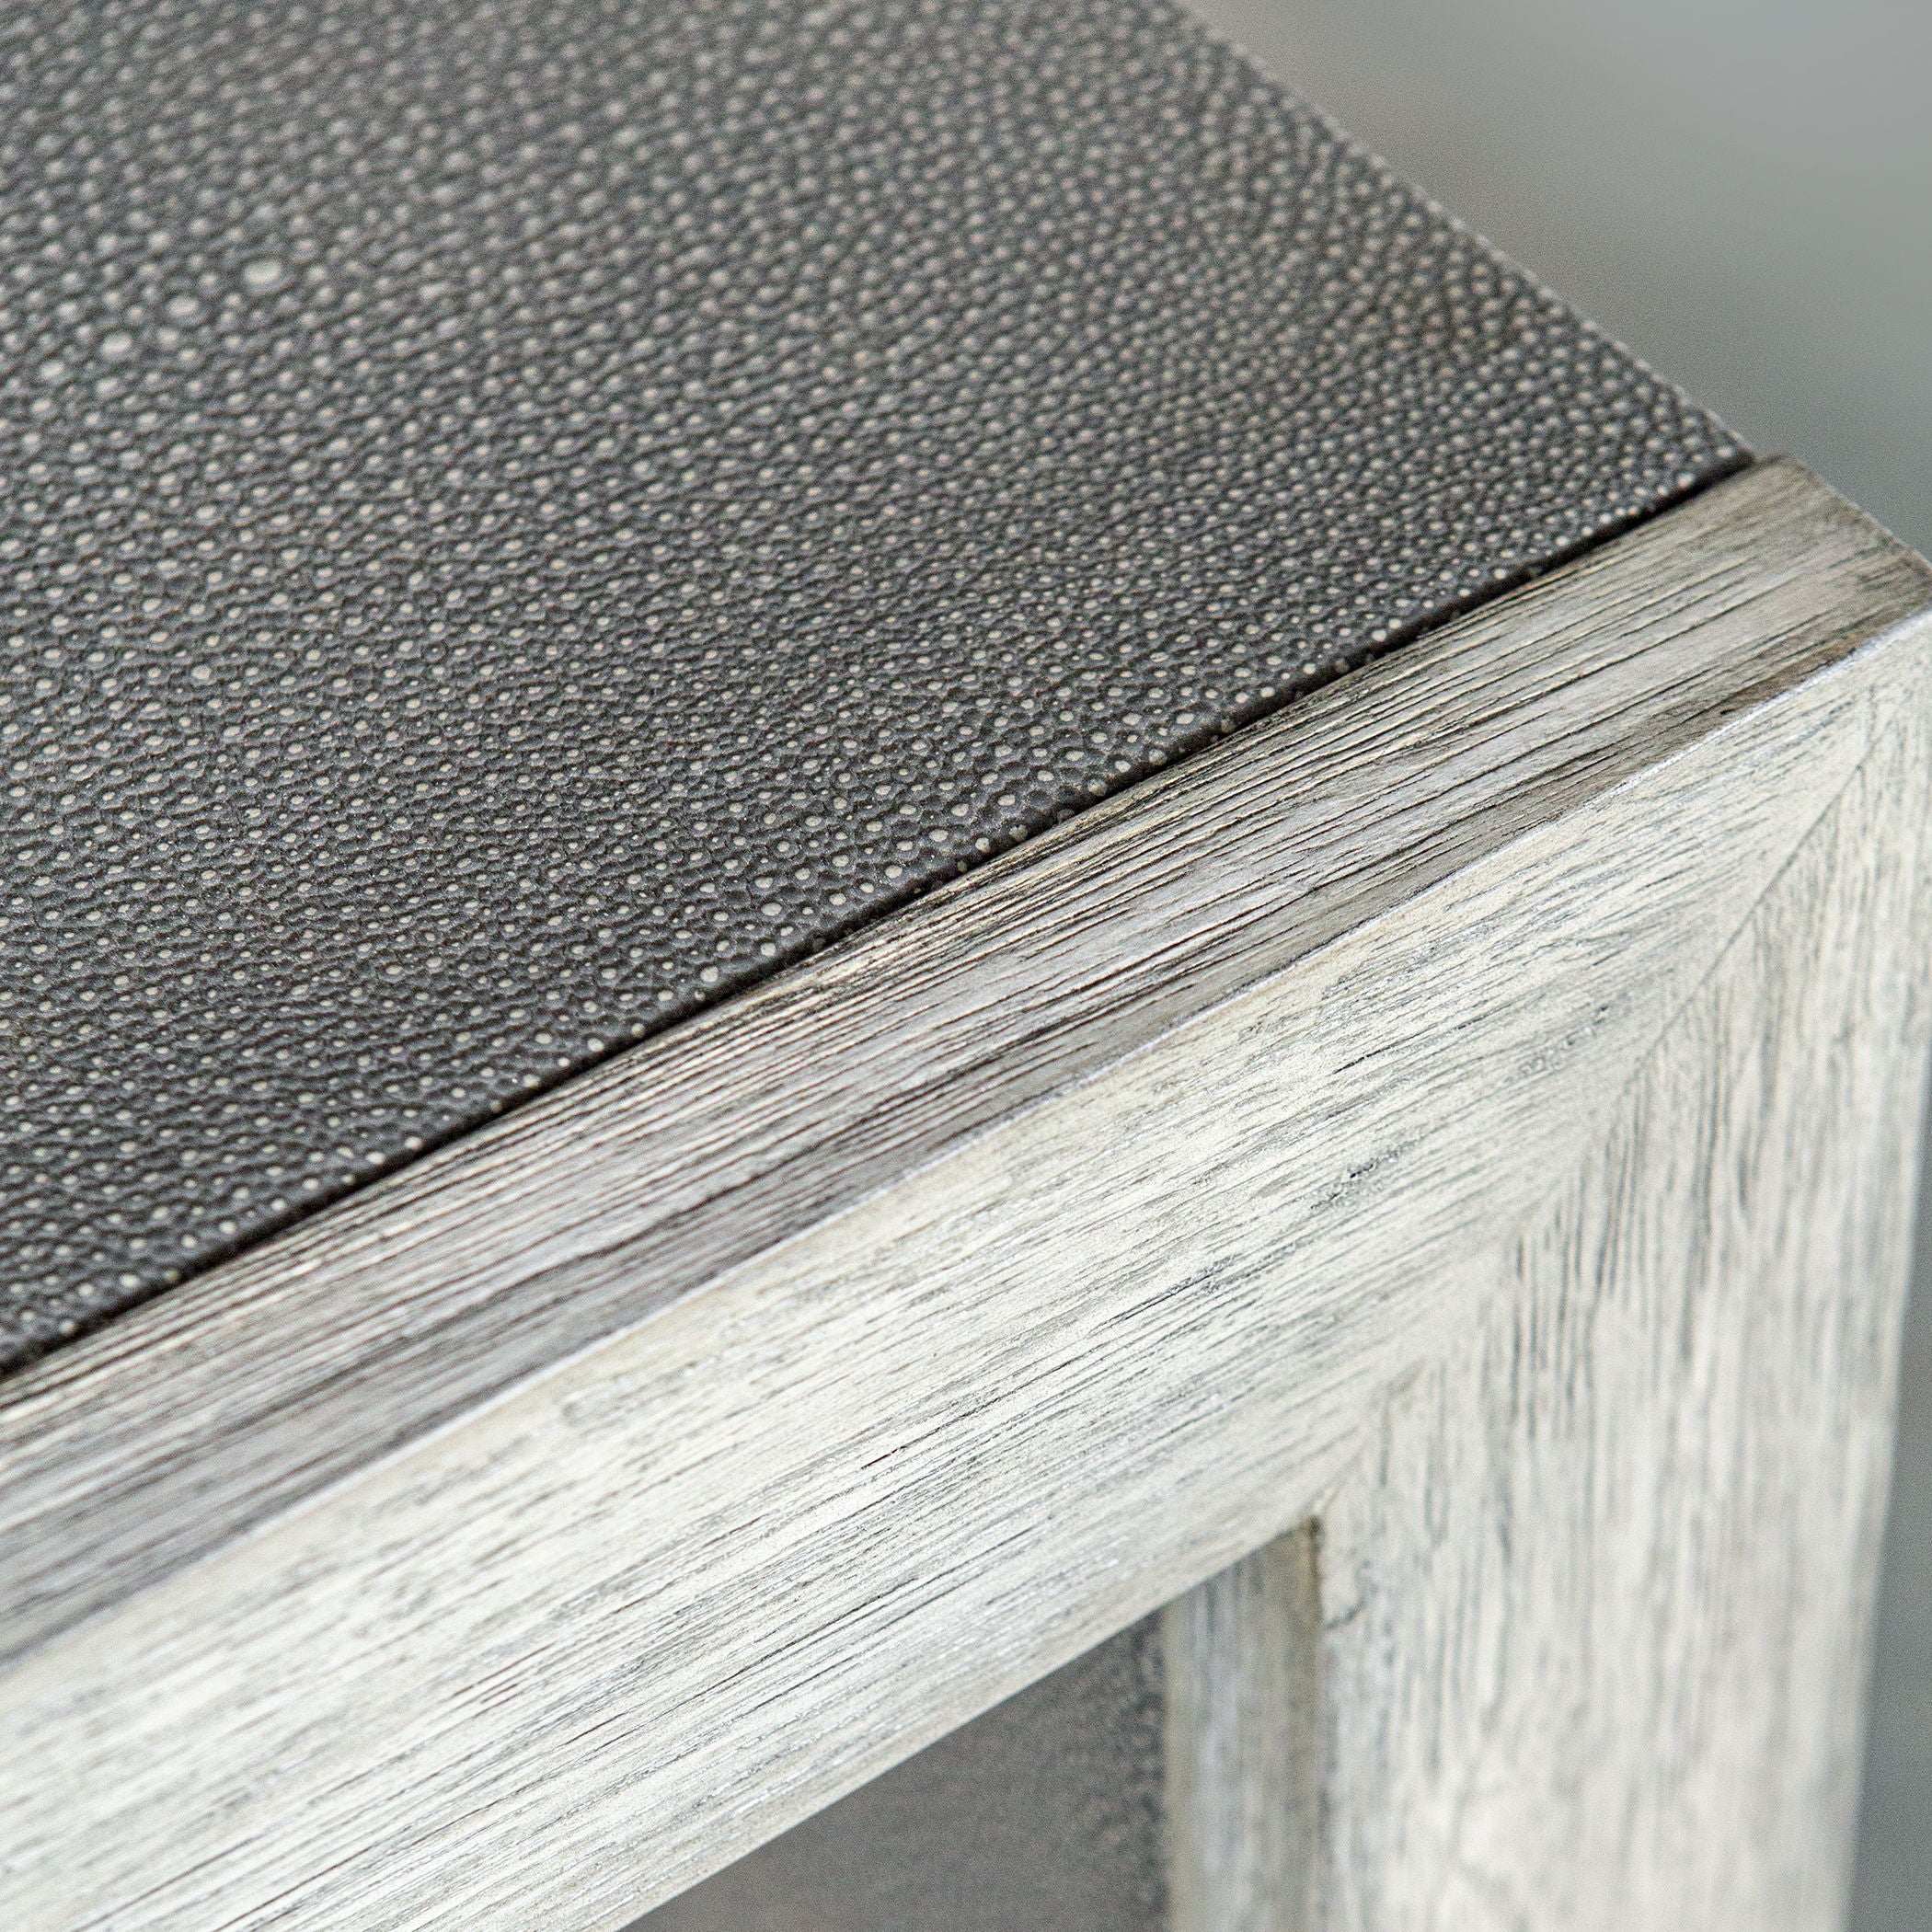 Aerina - Console Table - Aged Gray